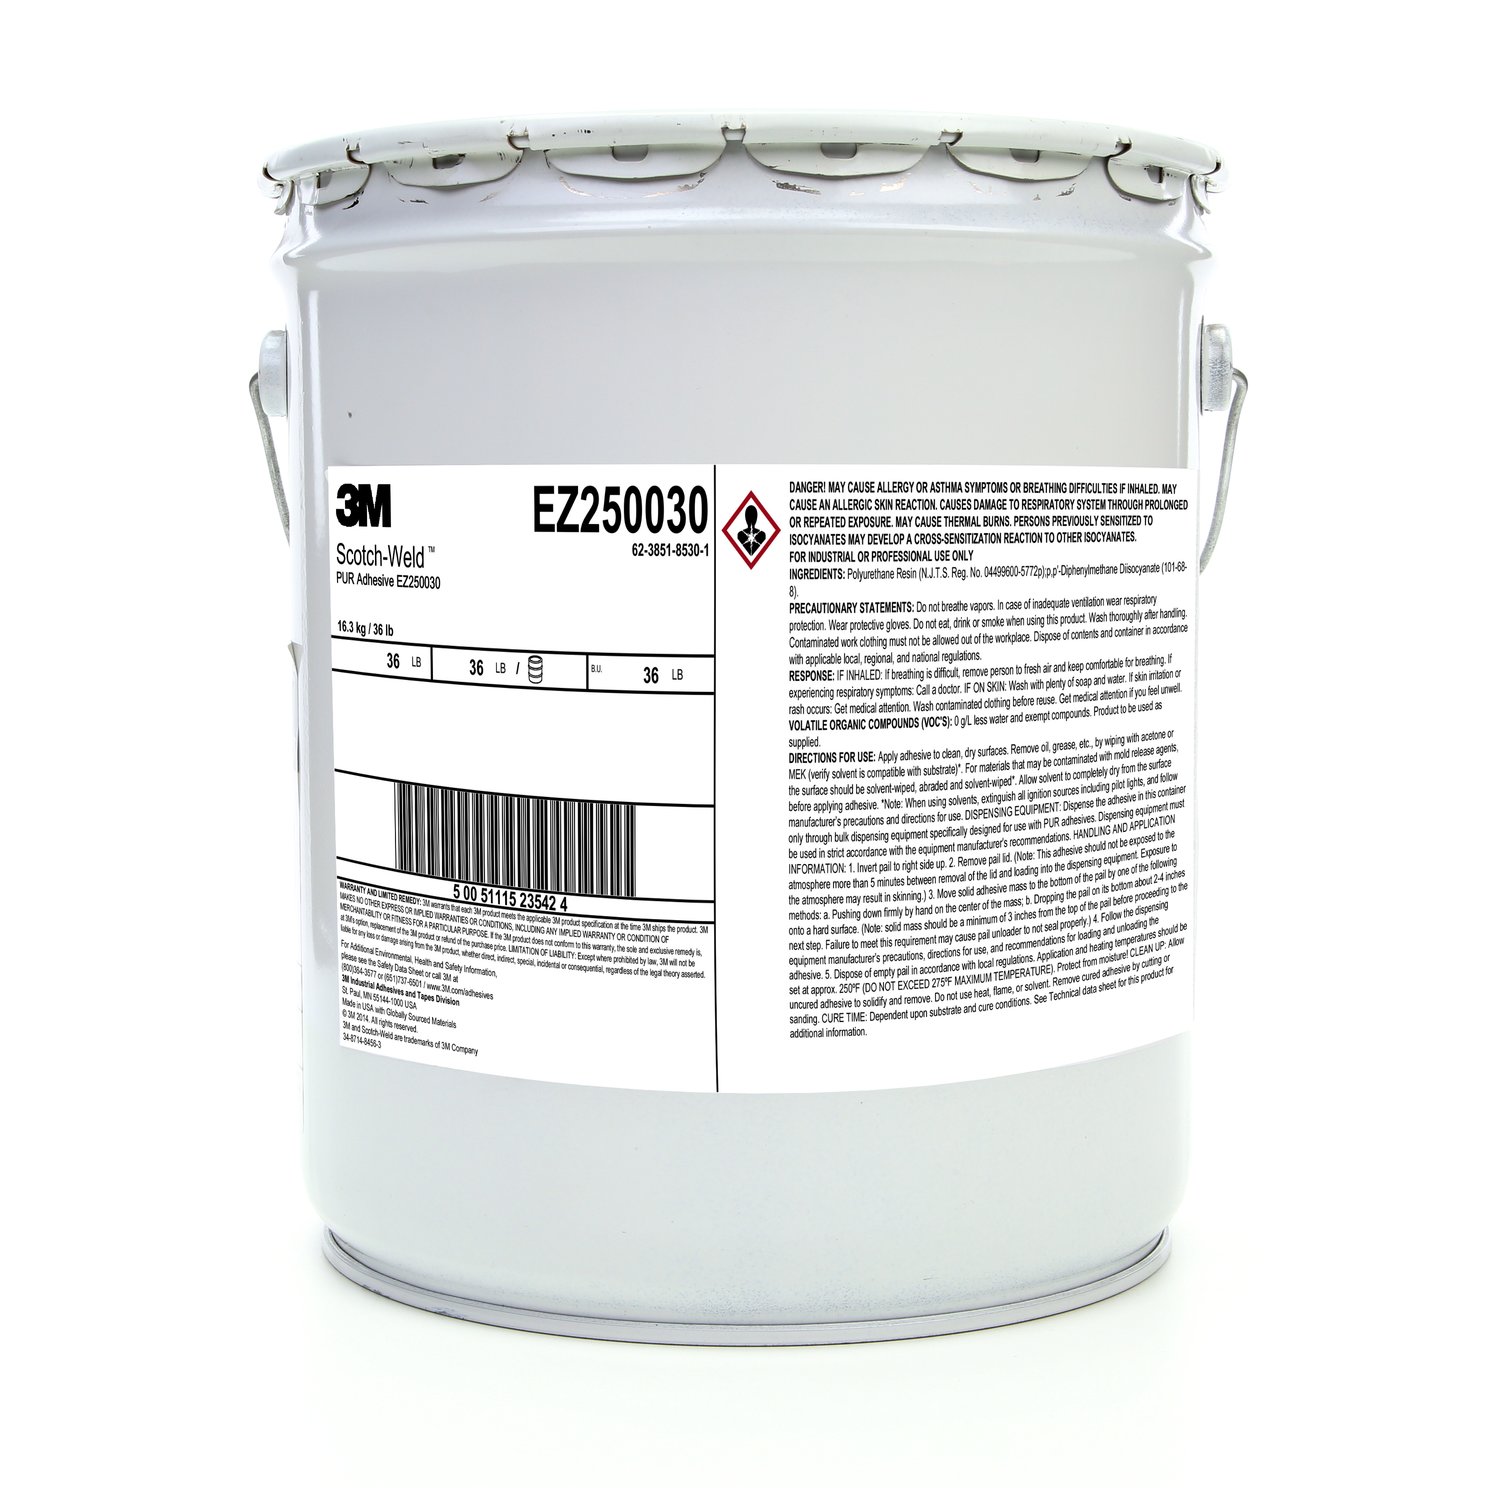 7000121357 - 3M Scotch-Weld PUR Adhesive EZ250030, Off-White, 5 Gallon Drum (36
lb), 1 Case/Drum